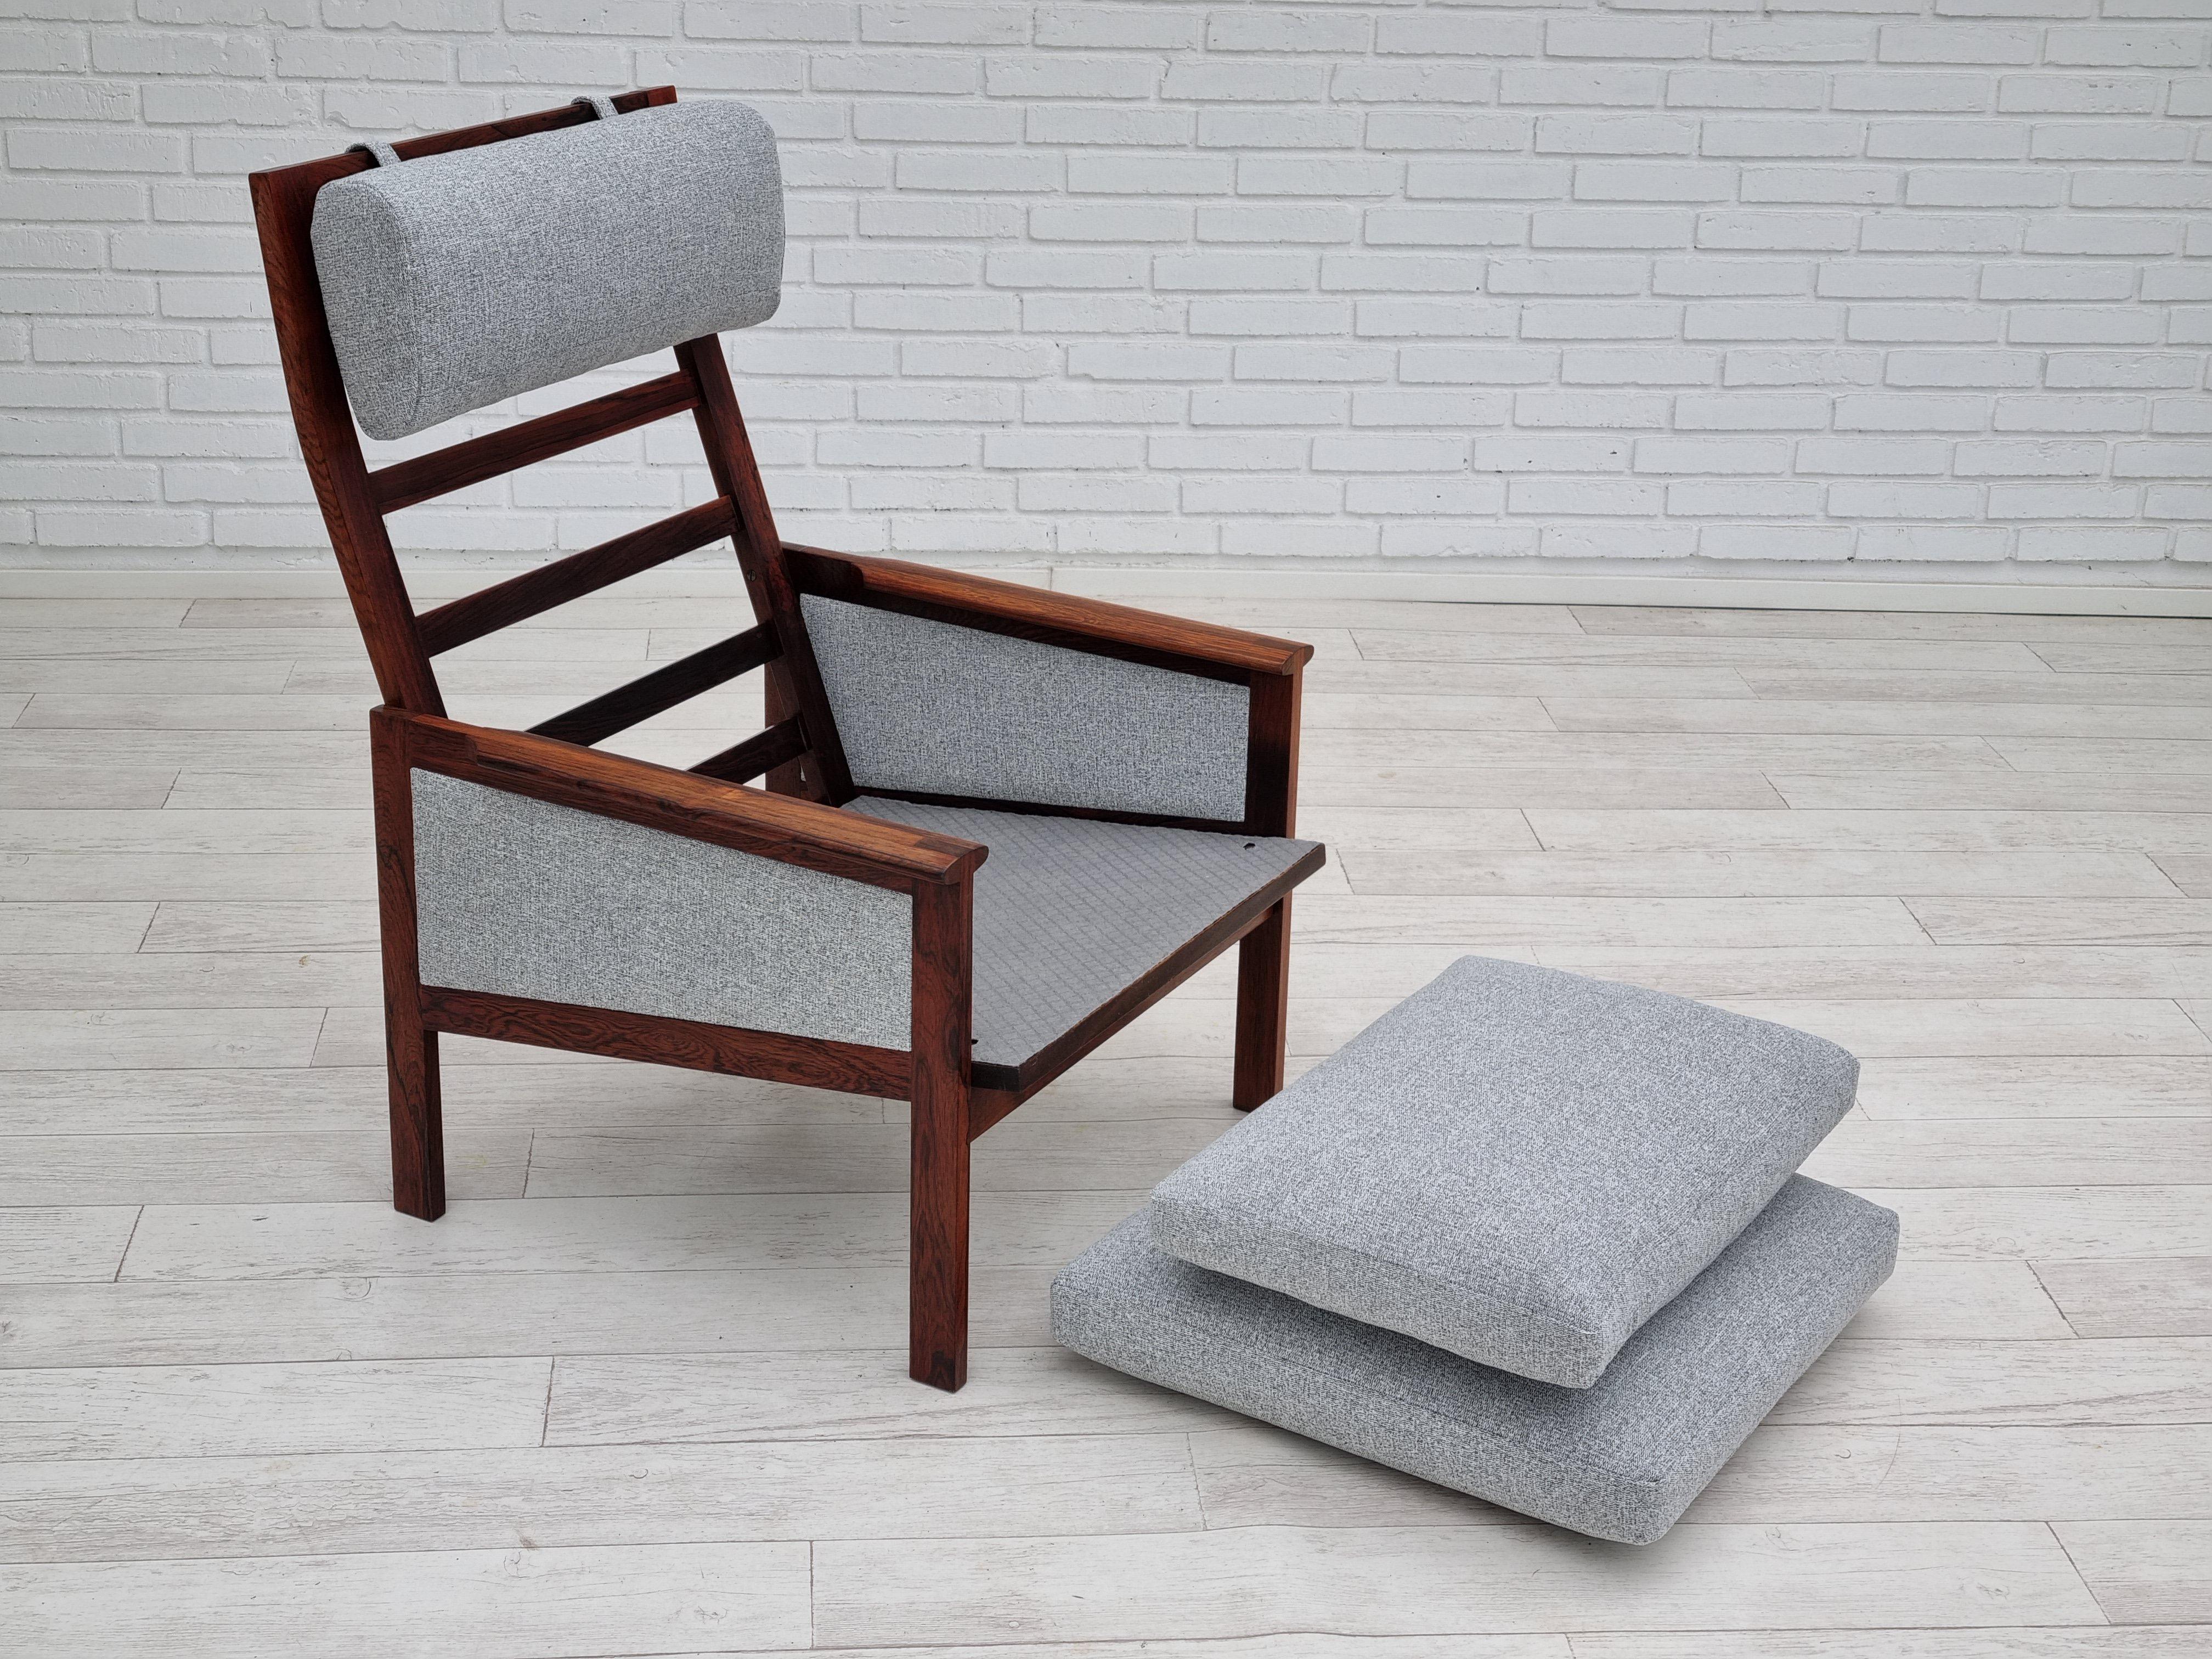 70s, Danish design by Illum Wikkelsø, model Capella, renovated armchair, teak For Sale 2